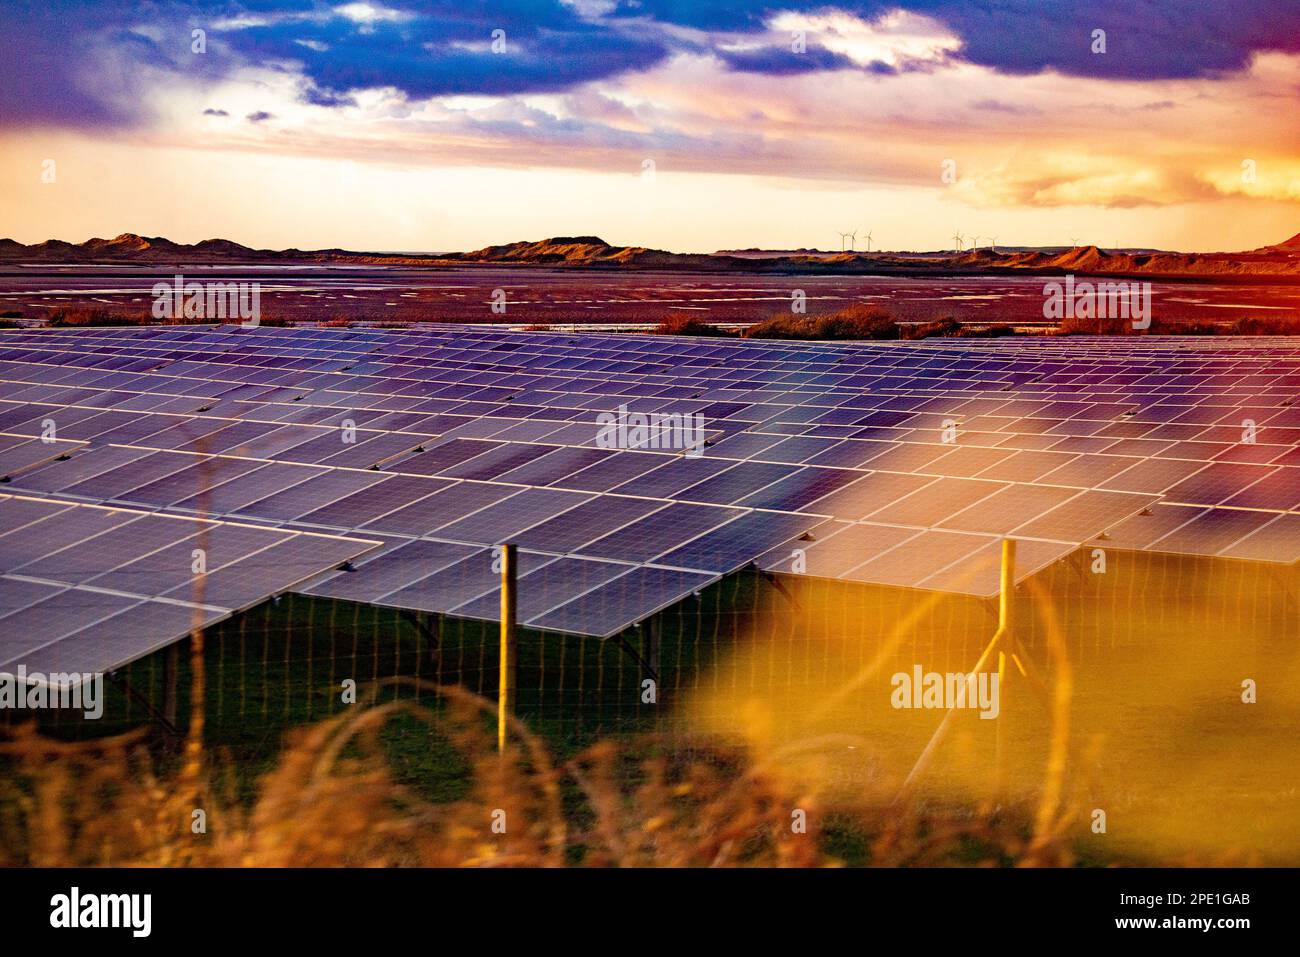 Roanhead solar farm, Barrow-in-Furness, Cumbria, UK Stock Photo